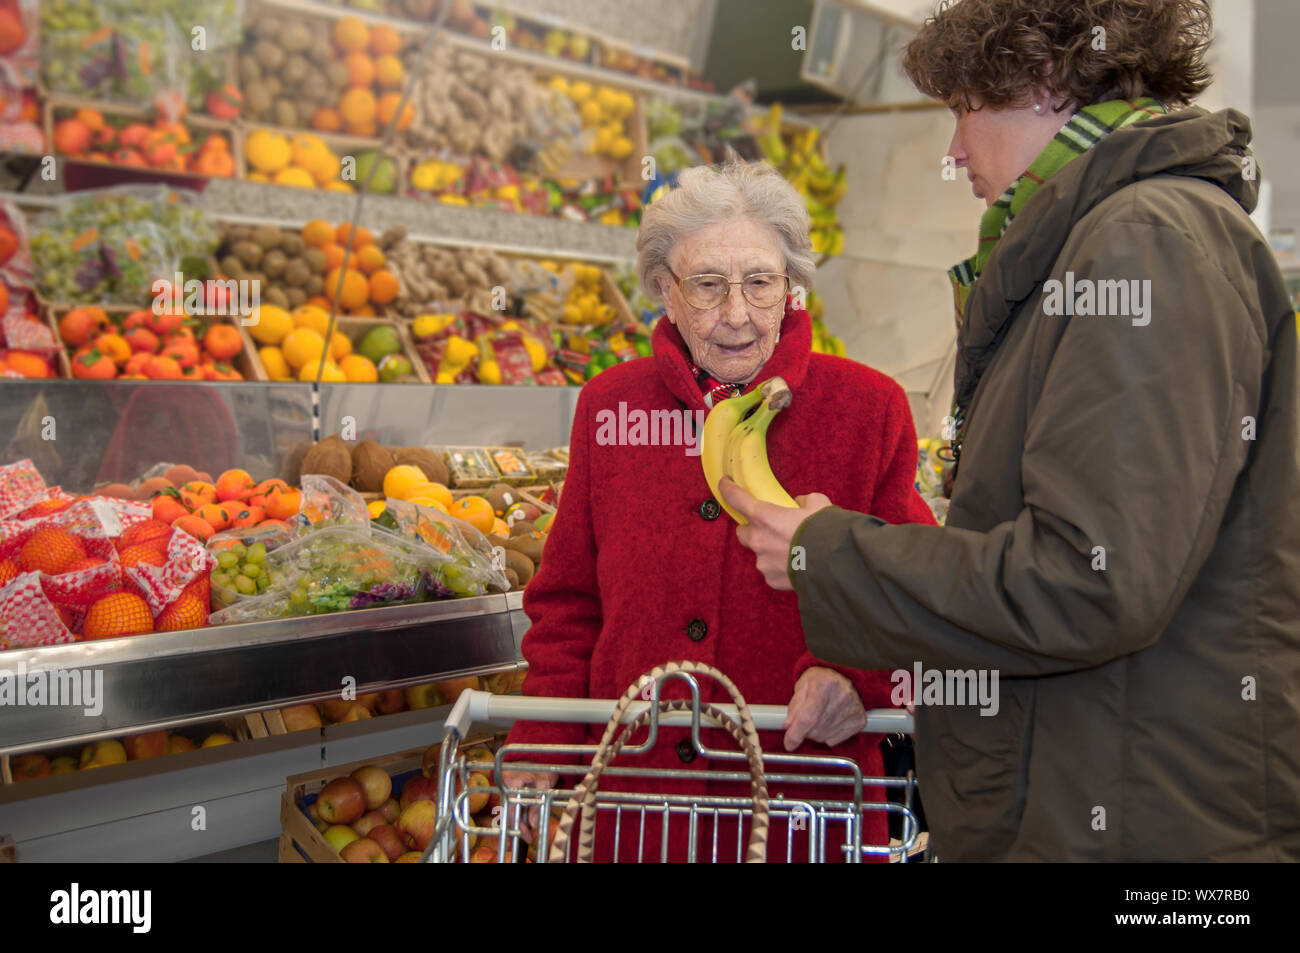 Caregiver helps senior woman while shopping Stock Photo